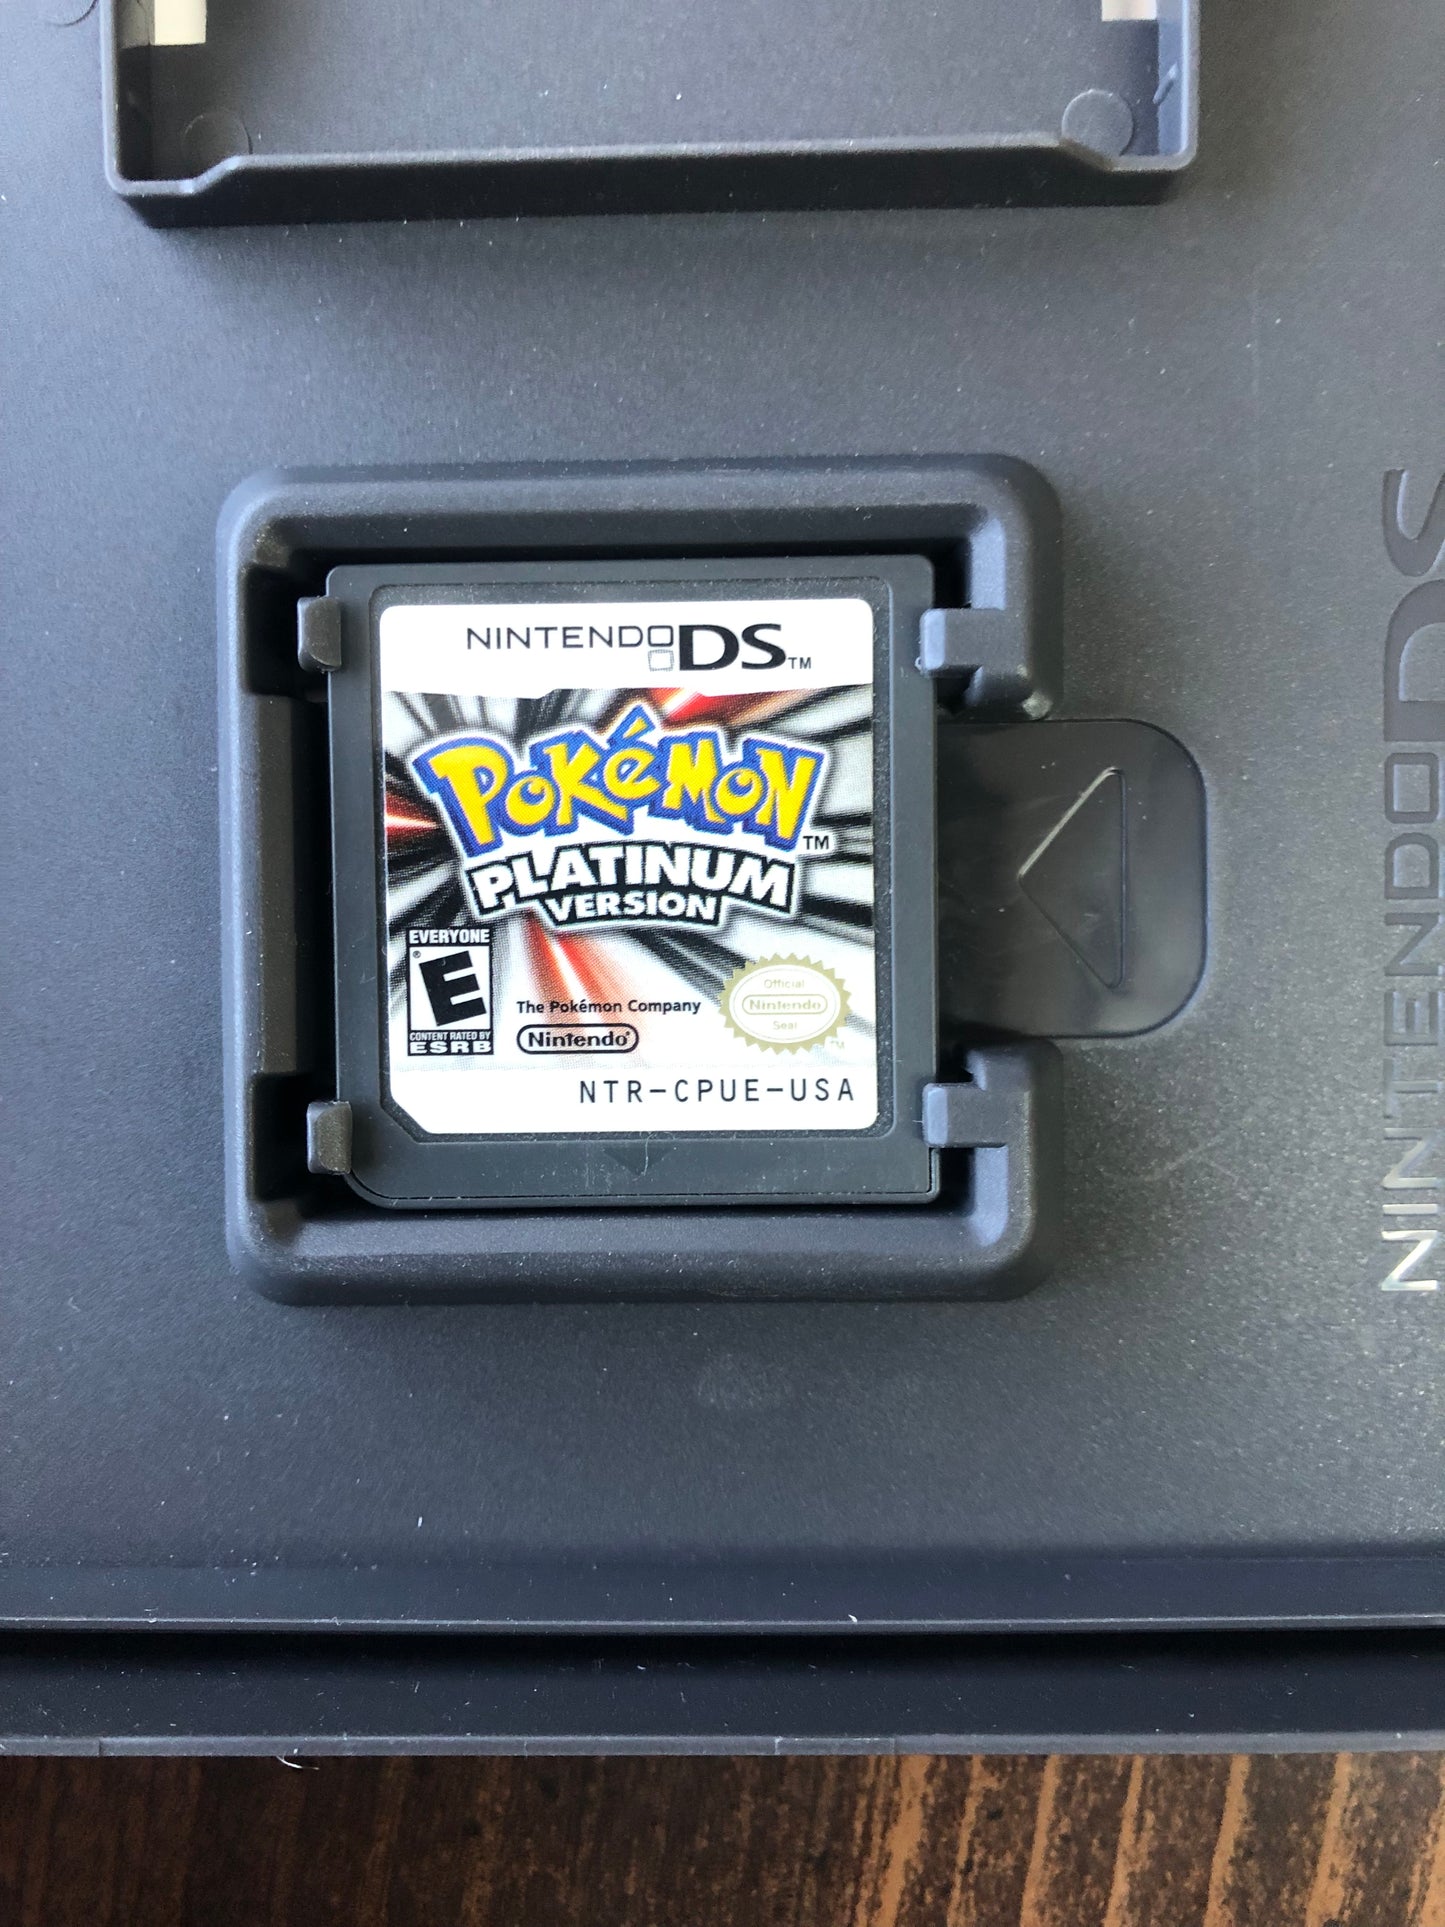 Pokémon: Platinum Version (Nintendo DS)